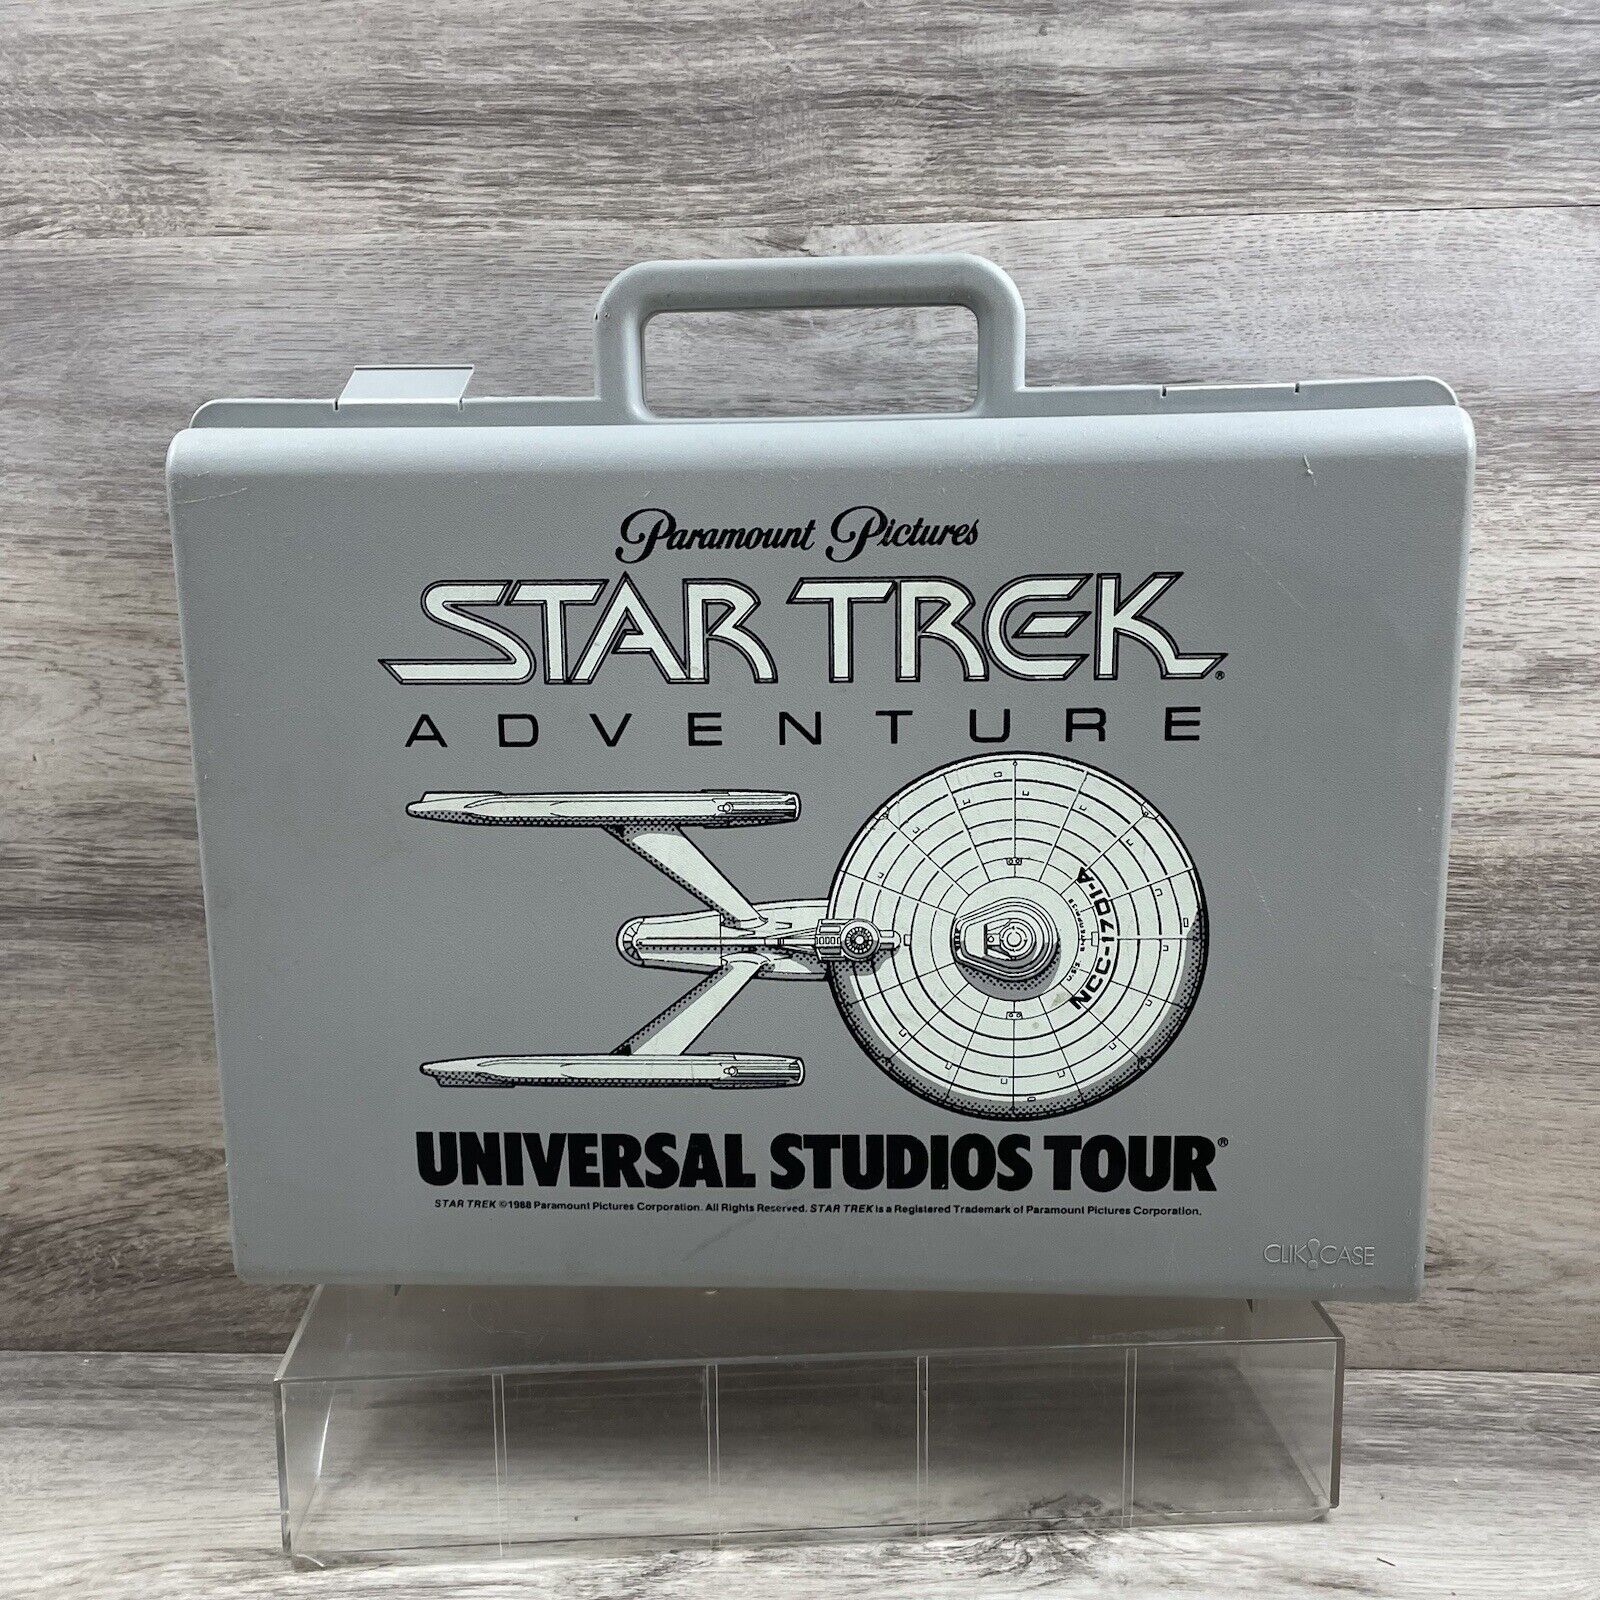 1988 STAR TREK ADVENTURE: PARAMOUNT PICTURES UNIVERSAL STUDIOS TOUR CLIKCASE